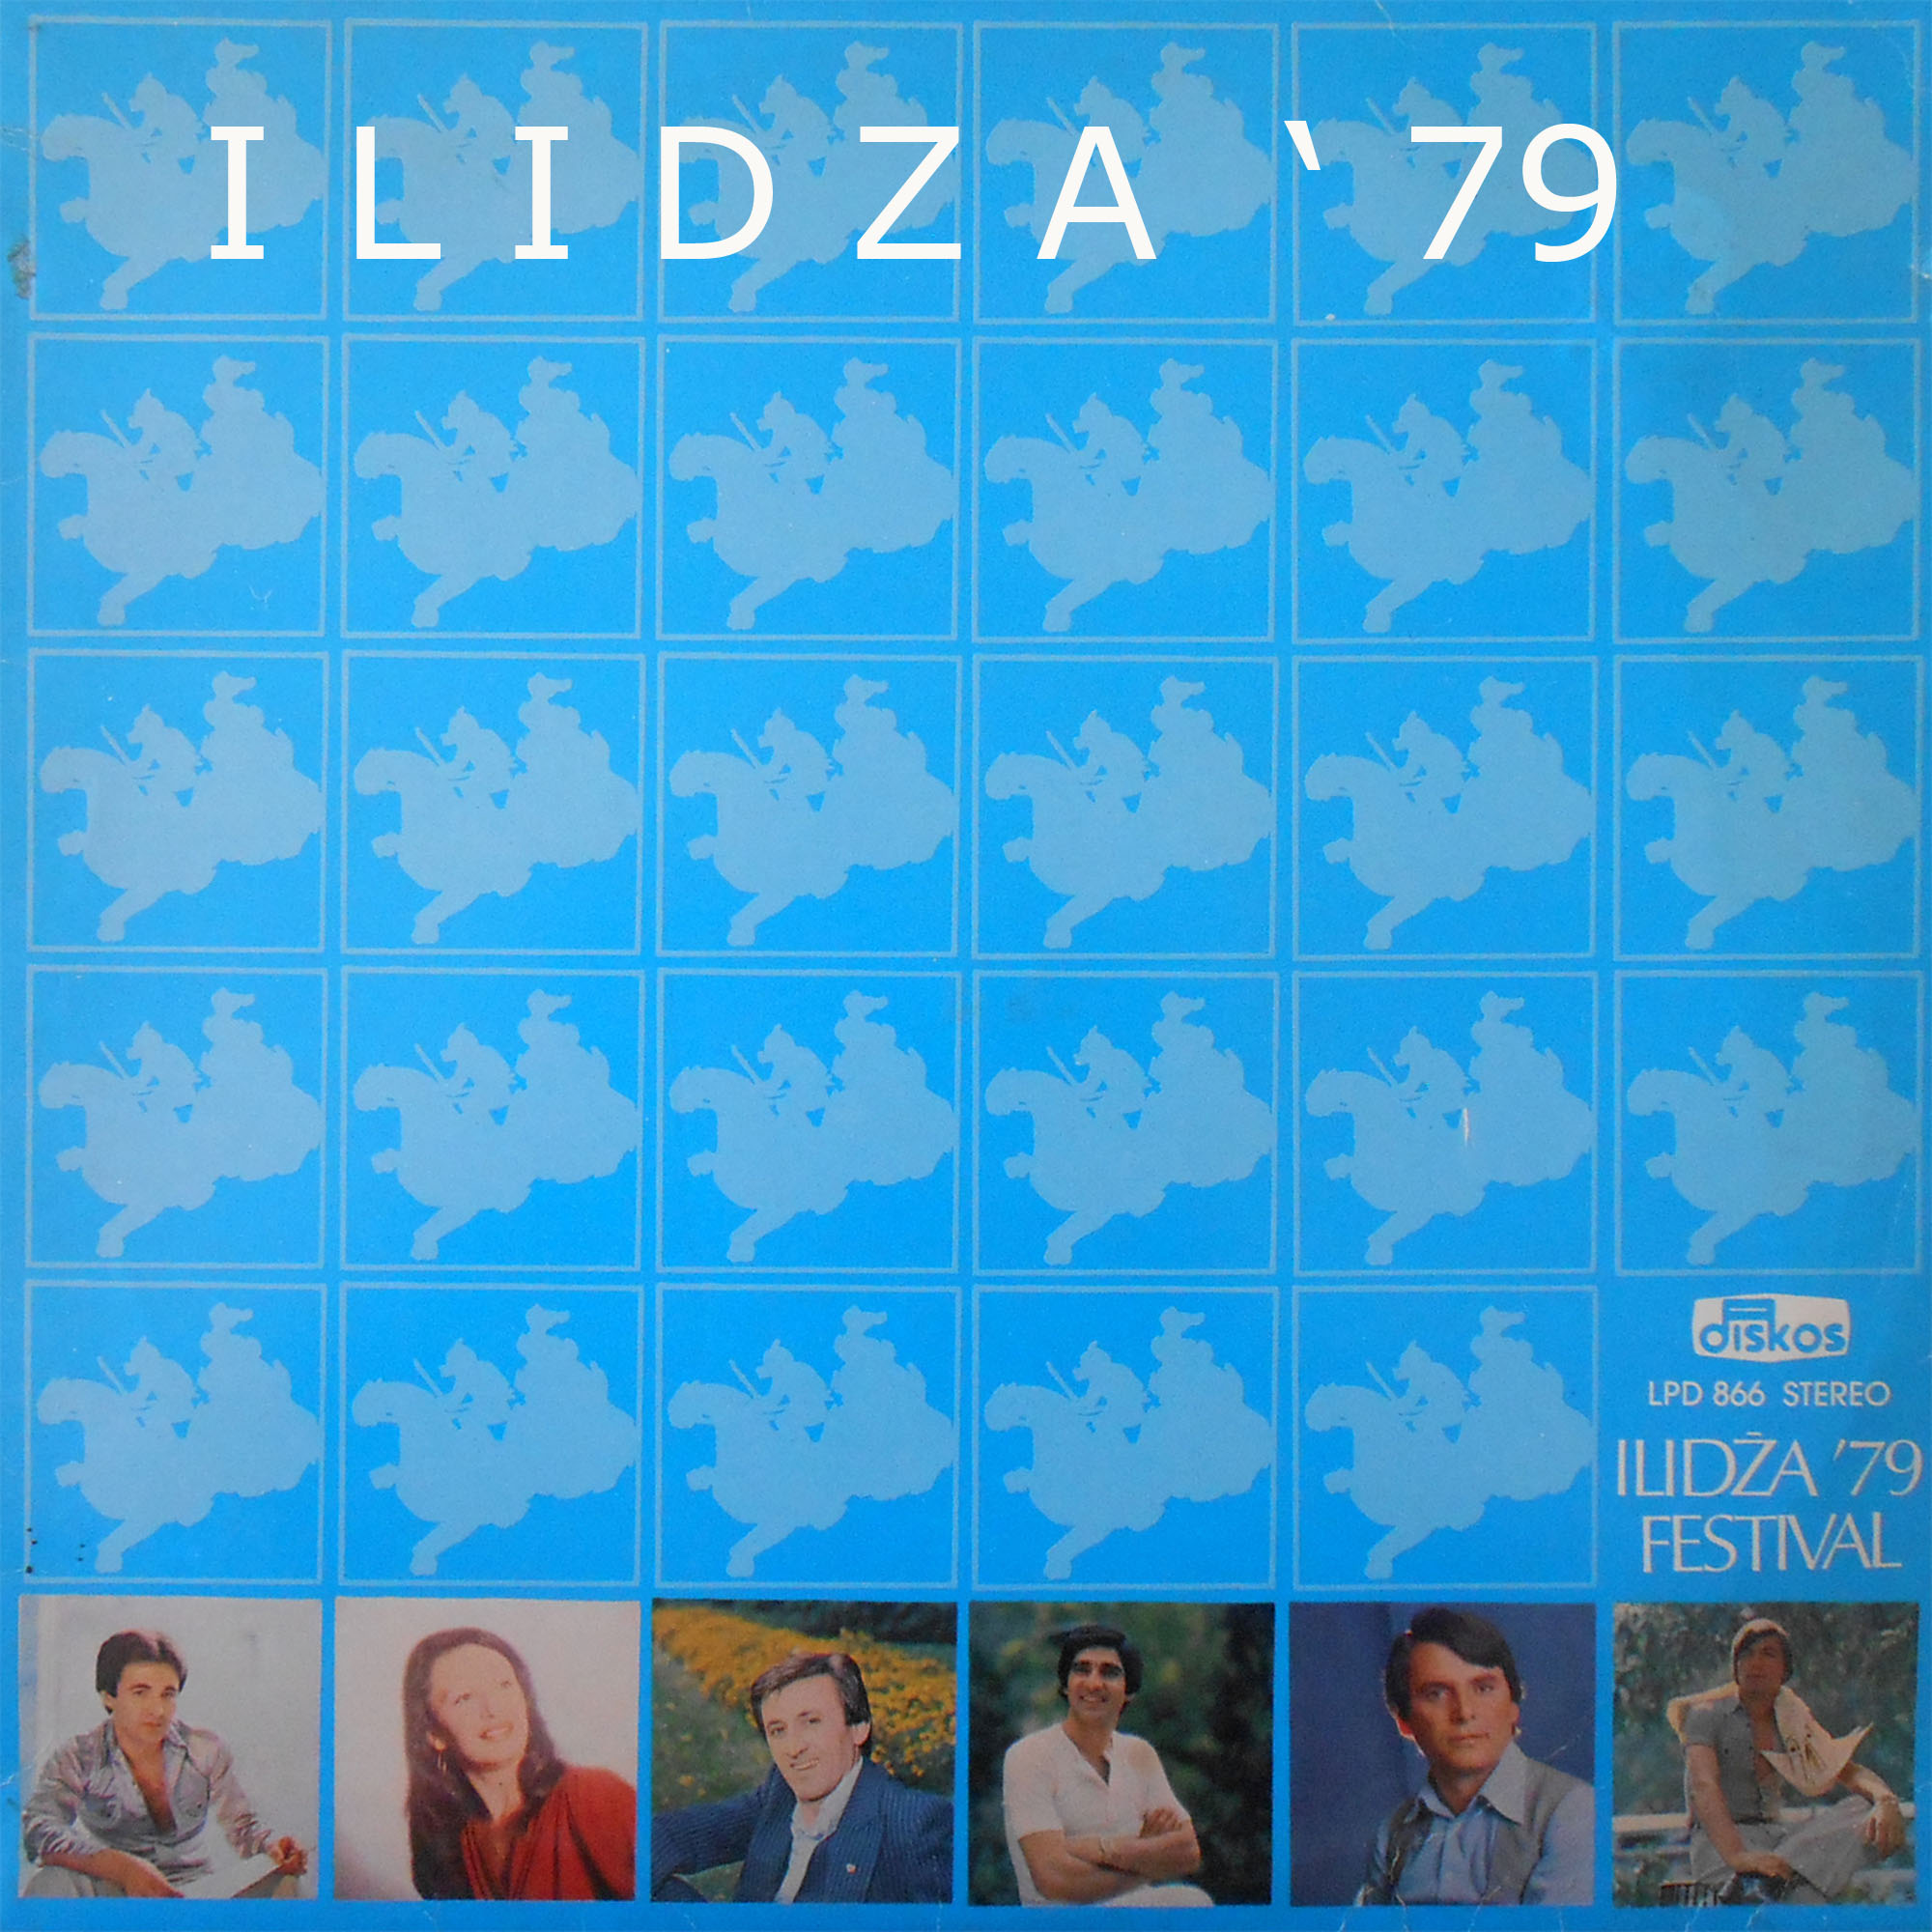 Ilidza festival 79